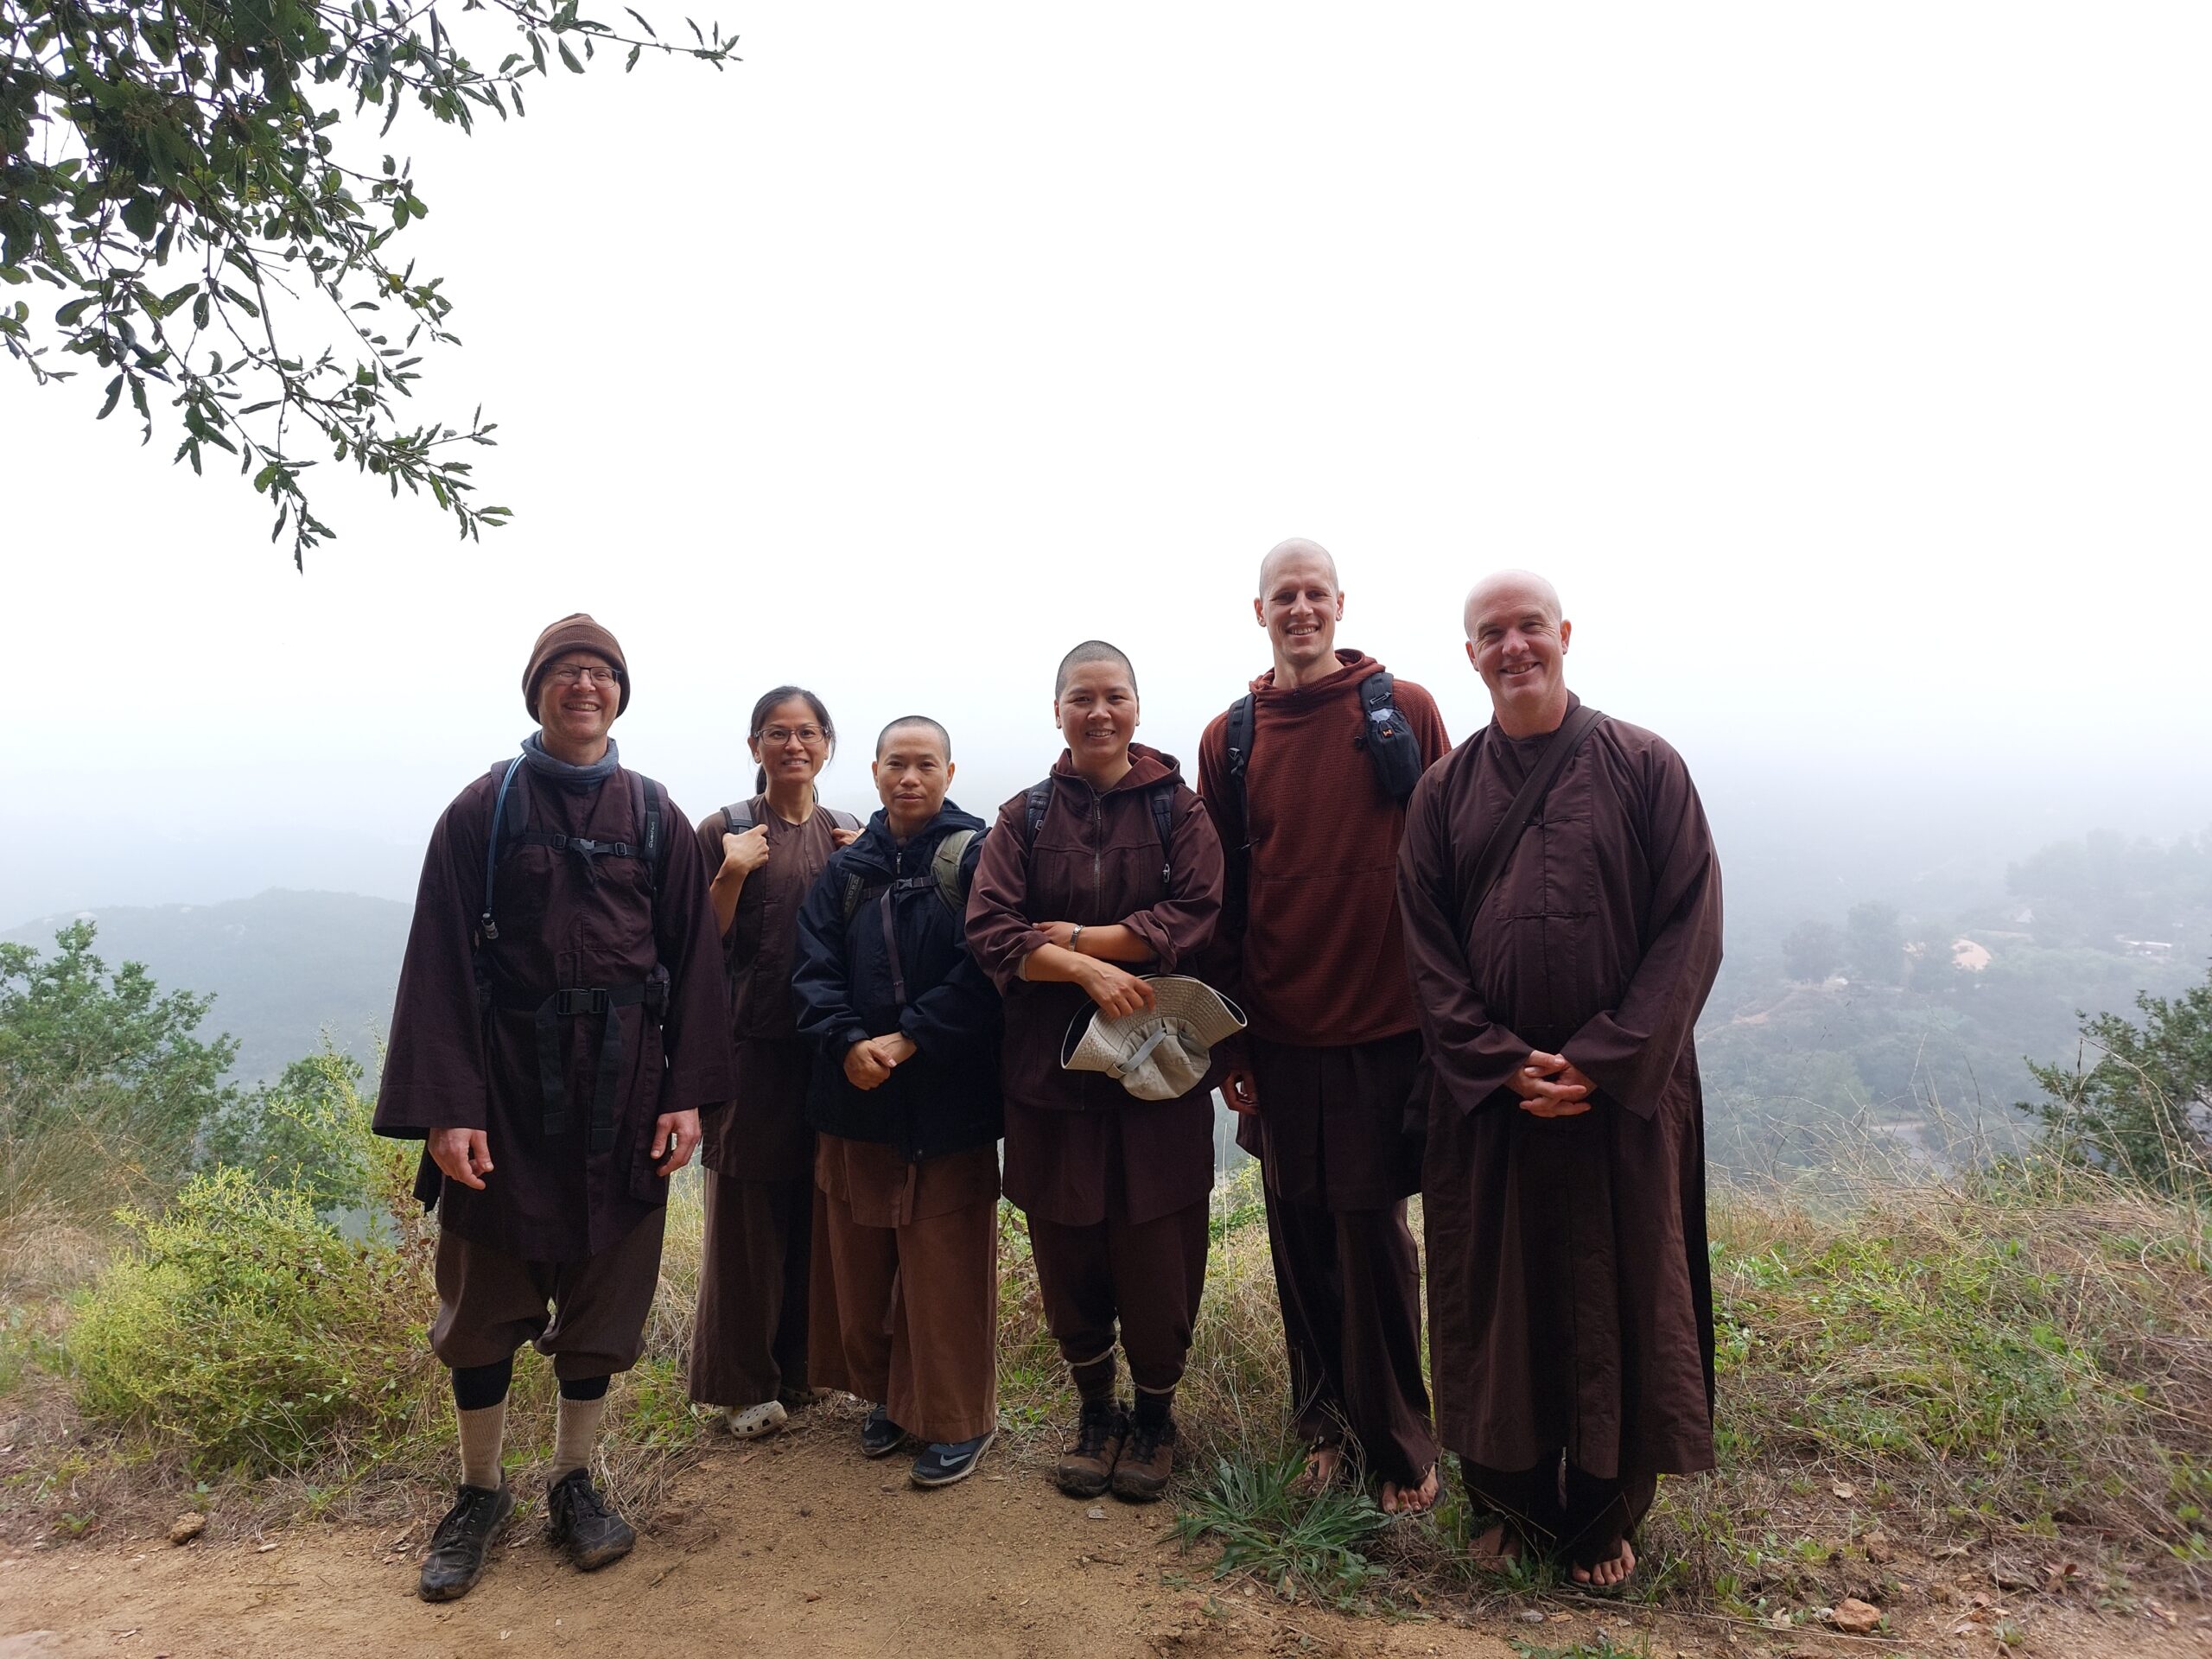 A Journey of Mindfulness: My U.S. Monastics Tour Experience